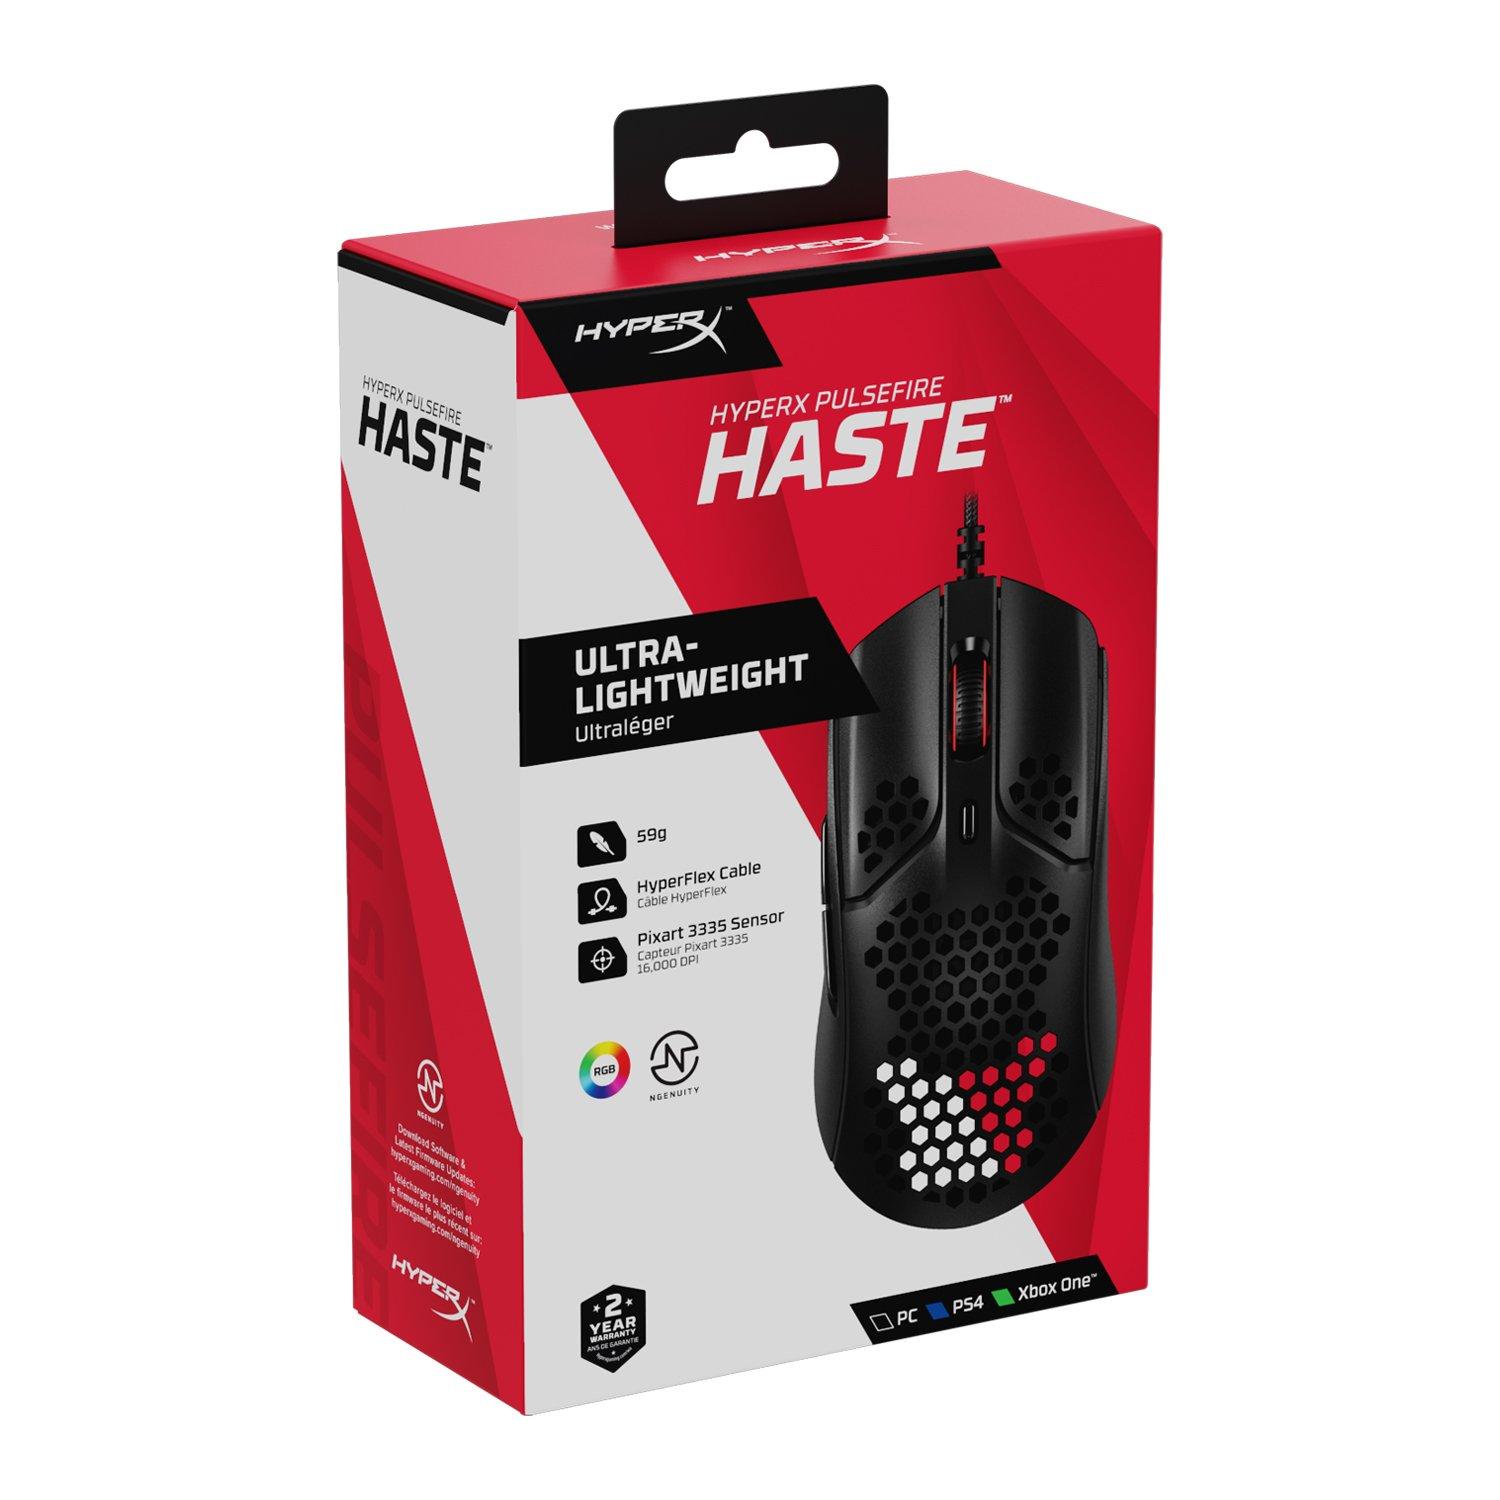 https://media.gamestop.com/i/gamestop/11155243_ALT07/HyperX-Pulsefire-Haste-Wired-Gaming-Mouse?$pdp$